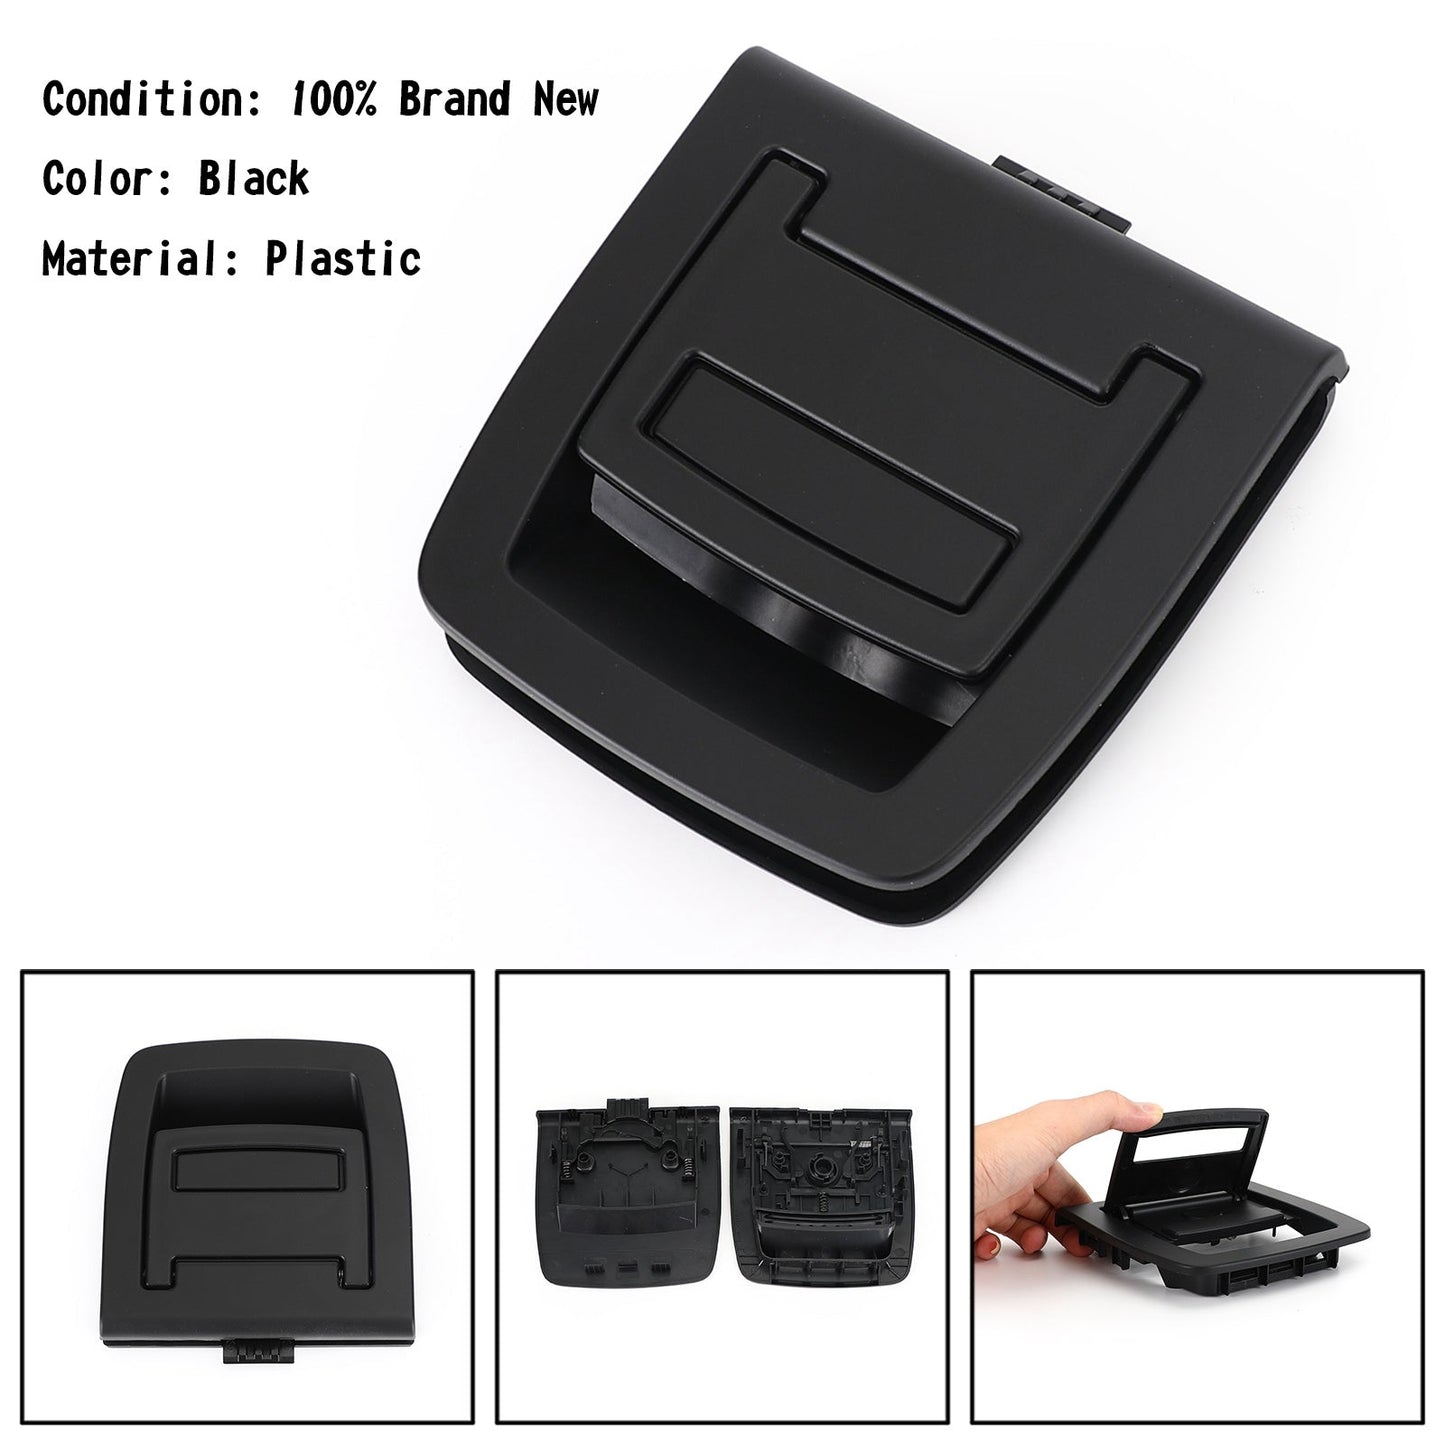 Black Interior Rear Trunk Mat Handle 51479120283 For BMW X5 E70 X6 E71